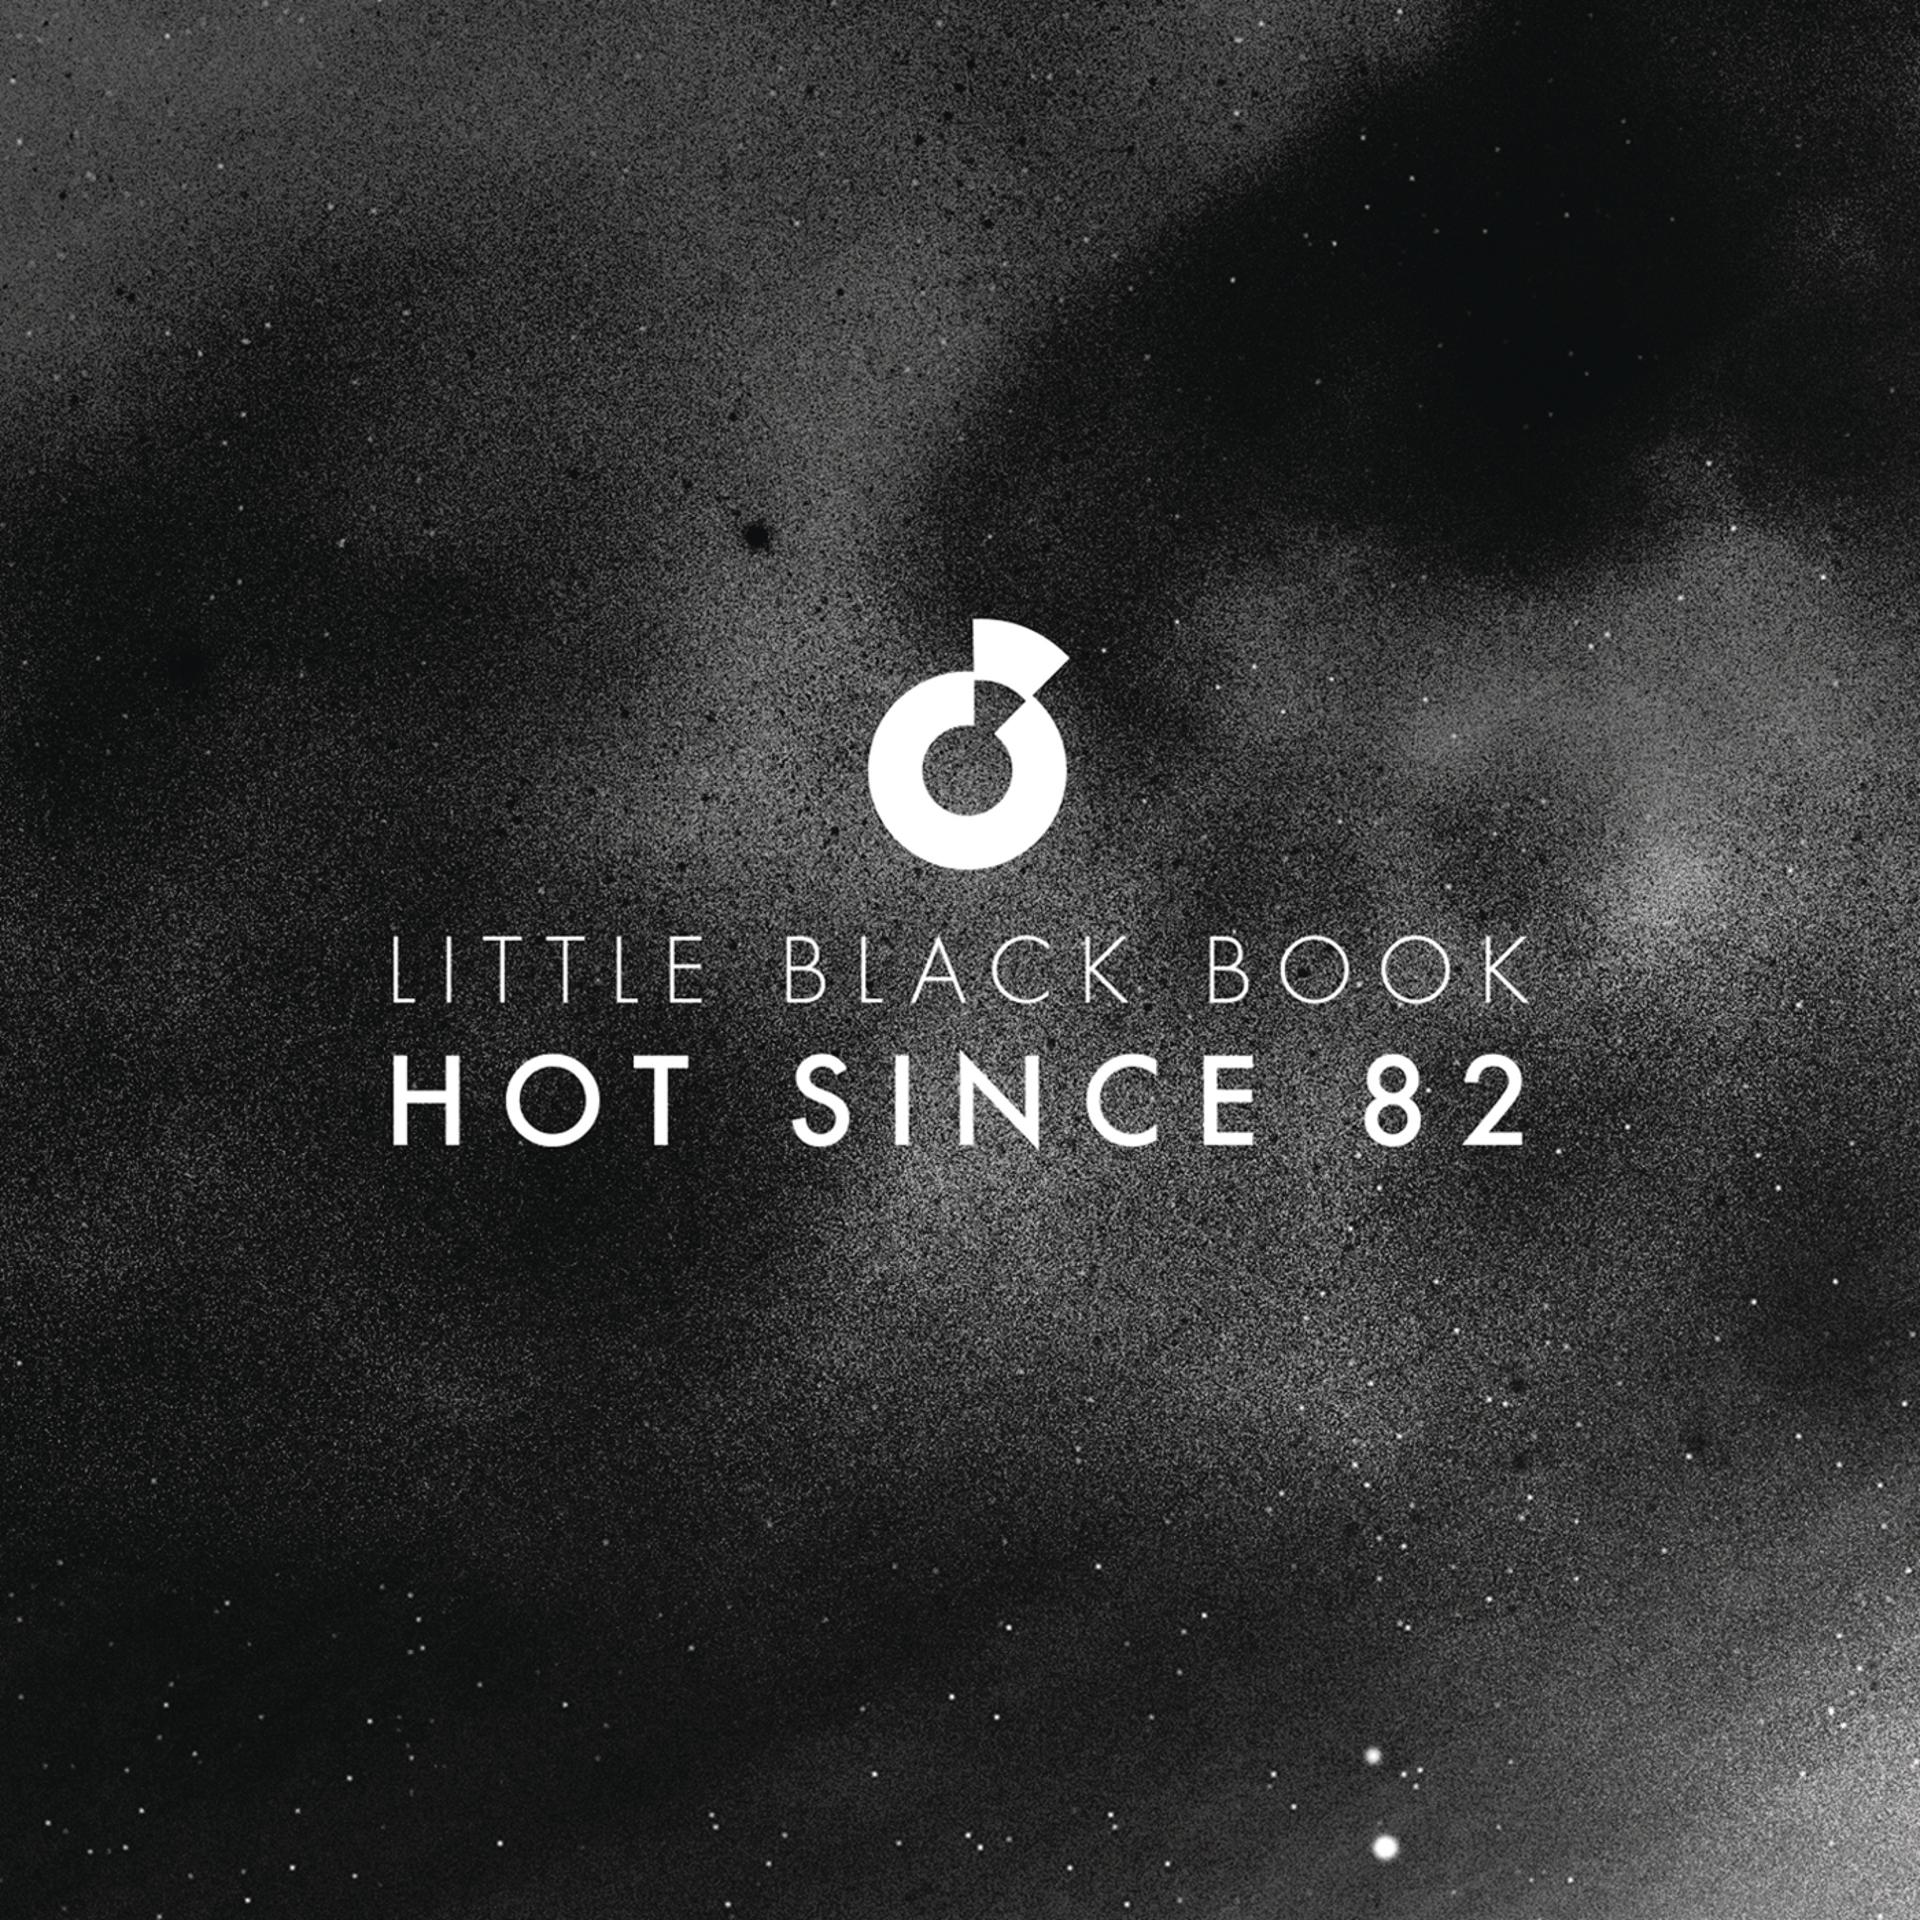 Hot since. Hot since 82. Little Black book. Lil Black book. Black book records.